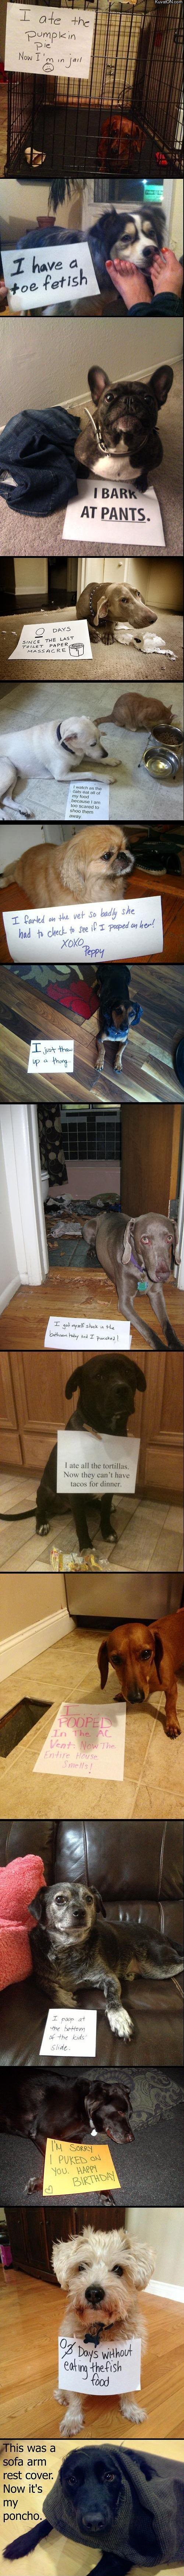 Best of dog shaming